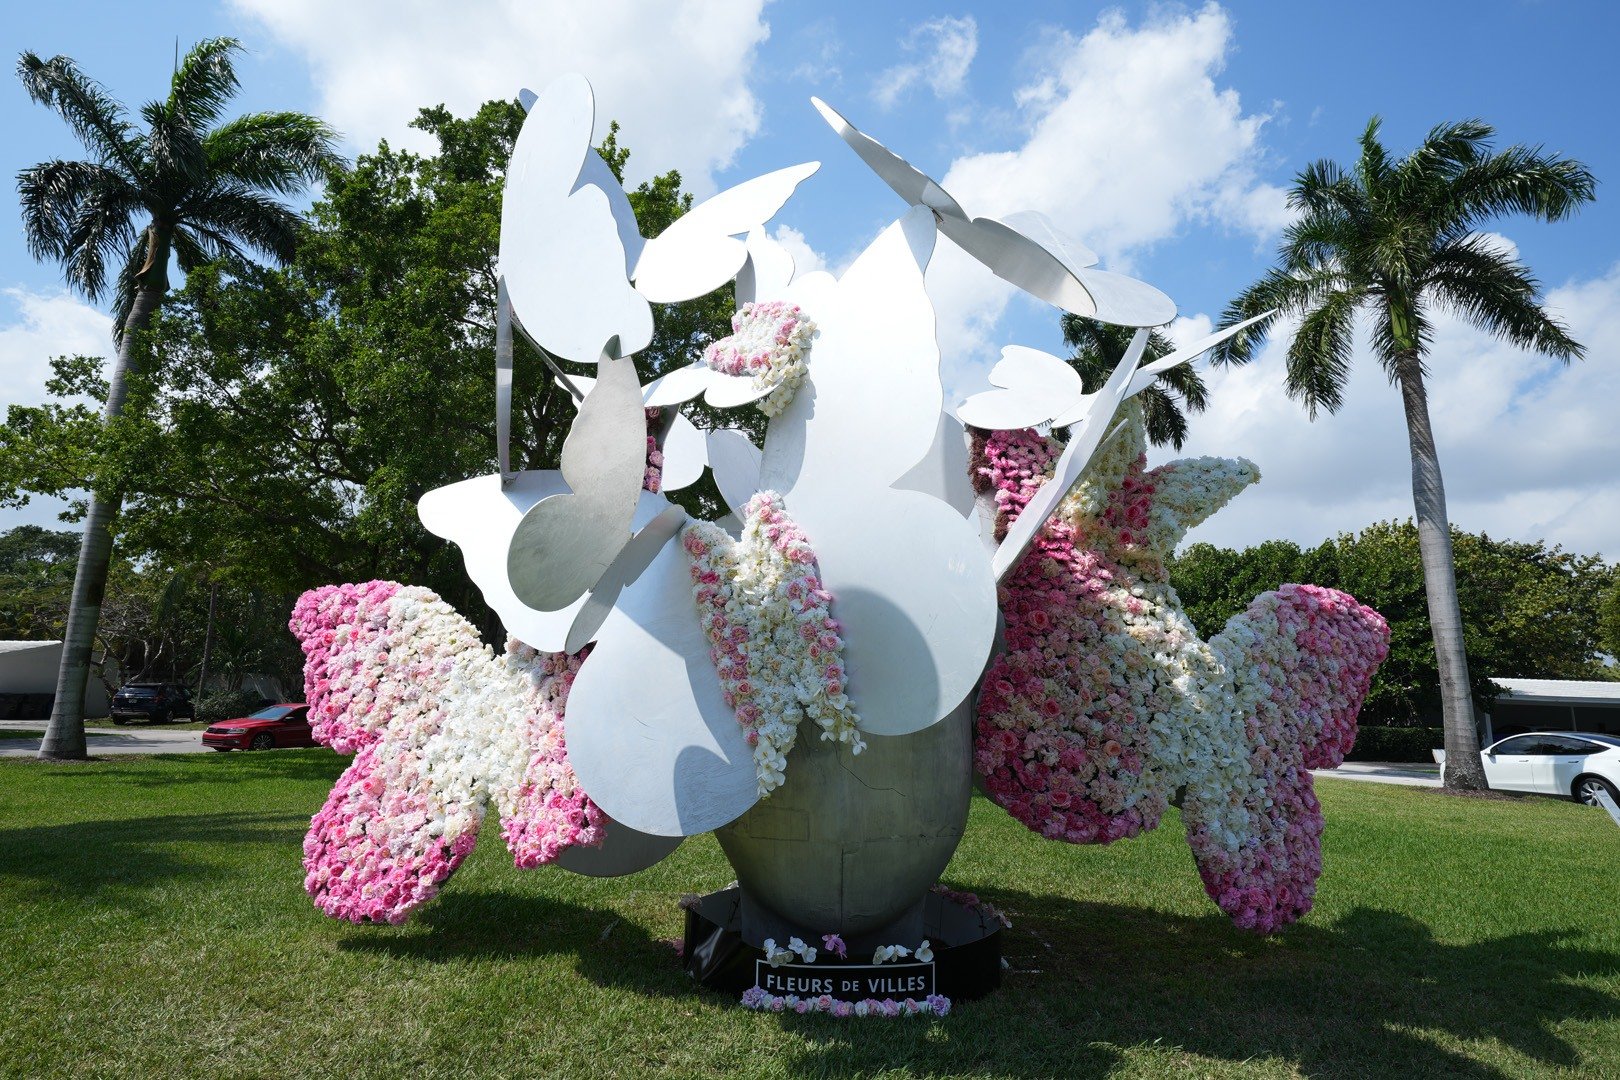 Valdés Butterflies floral sculpture created by Blake Roses